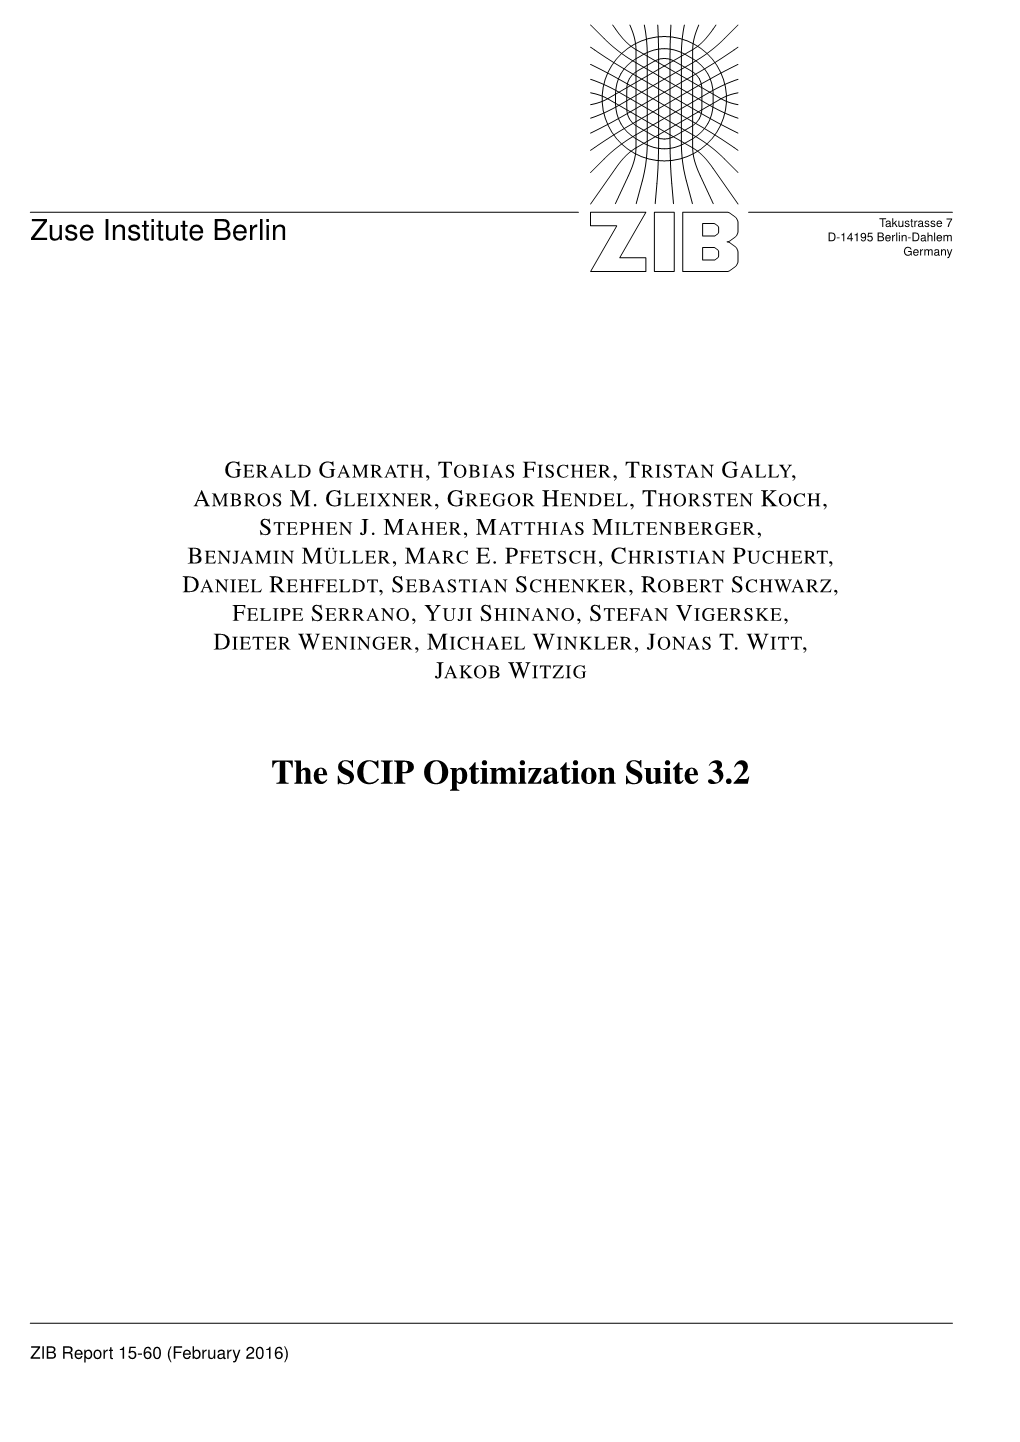 The SCIP Optimization Suite 3.2